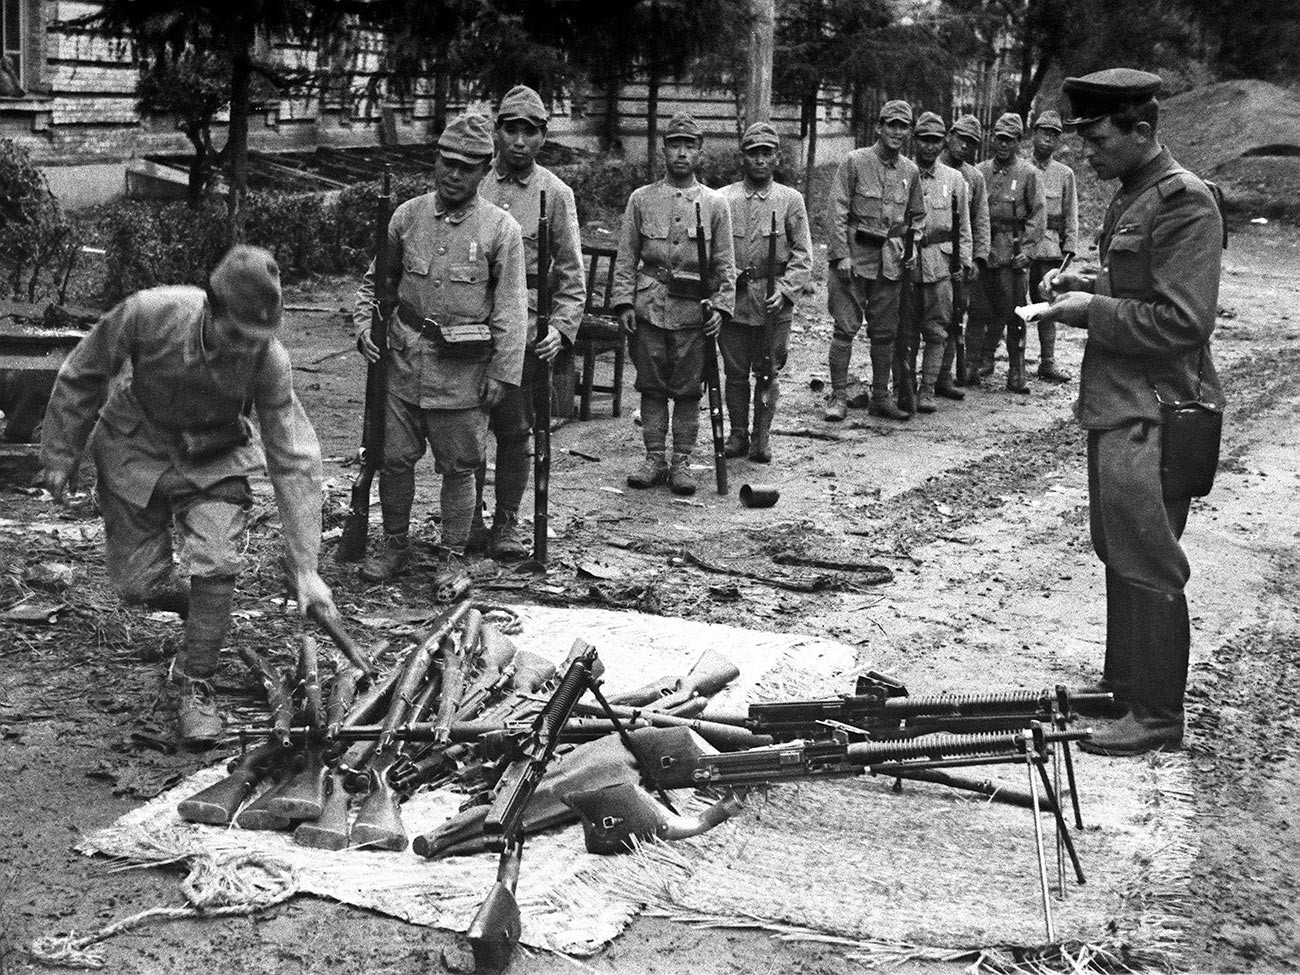 Drugi svjetski rat 1939.-1945. Kolovoz 1945. Slom imperijalističkog Japana. Mandžurska operacija od 9. kolovoza do 2. rujna 1945. Kapitulacija Kvantunške vojske.

